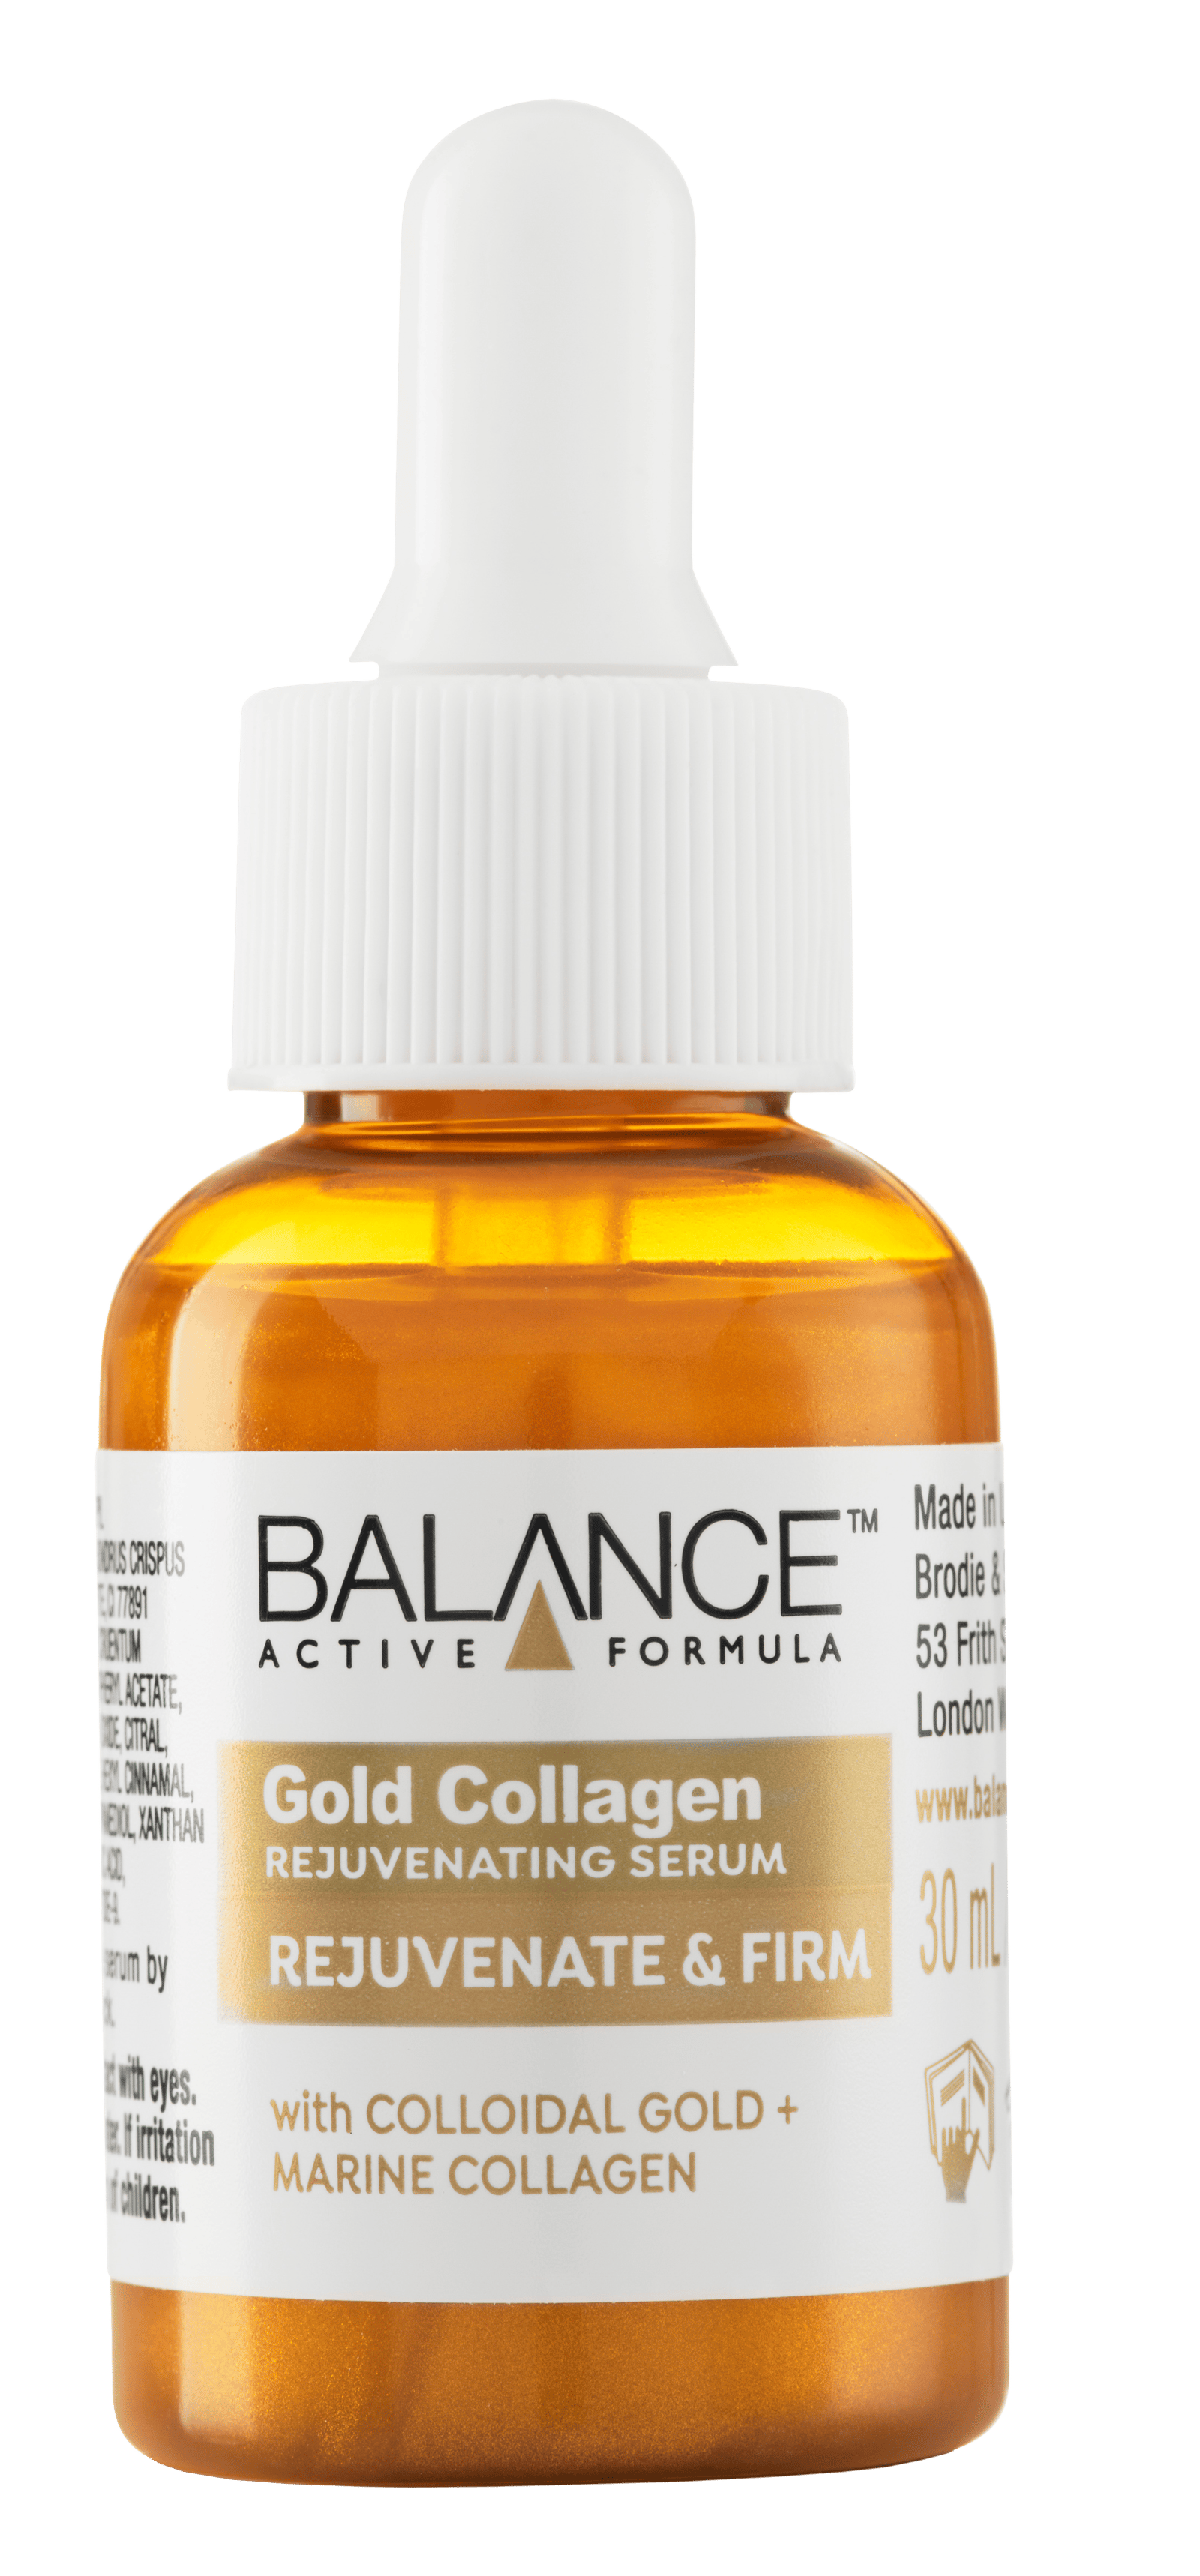 Balance Active Formula Gold + Marine Collagen Rejuvenating Serum 30 ml